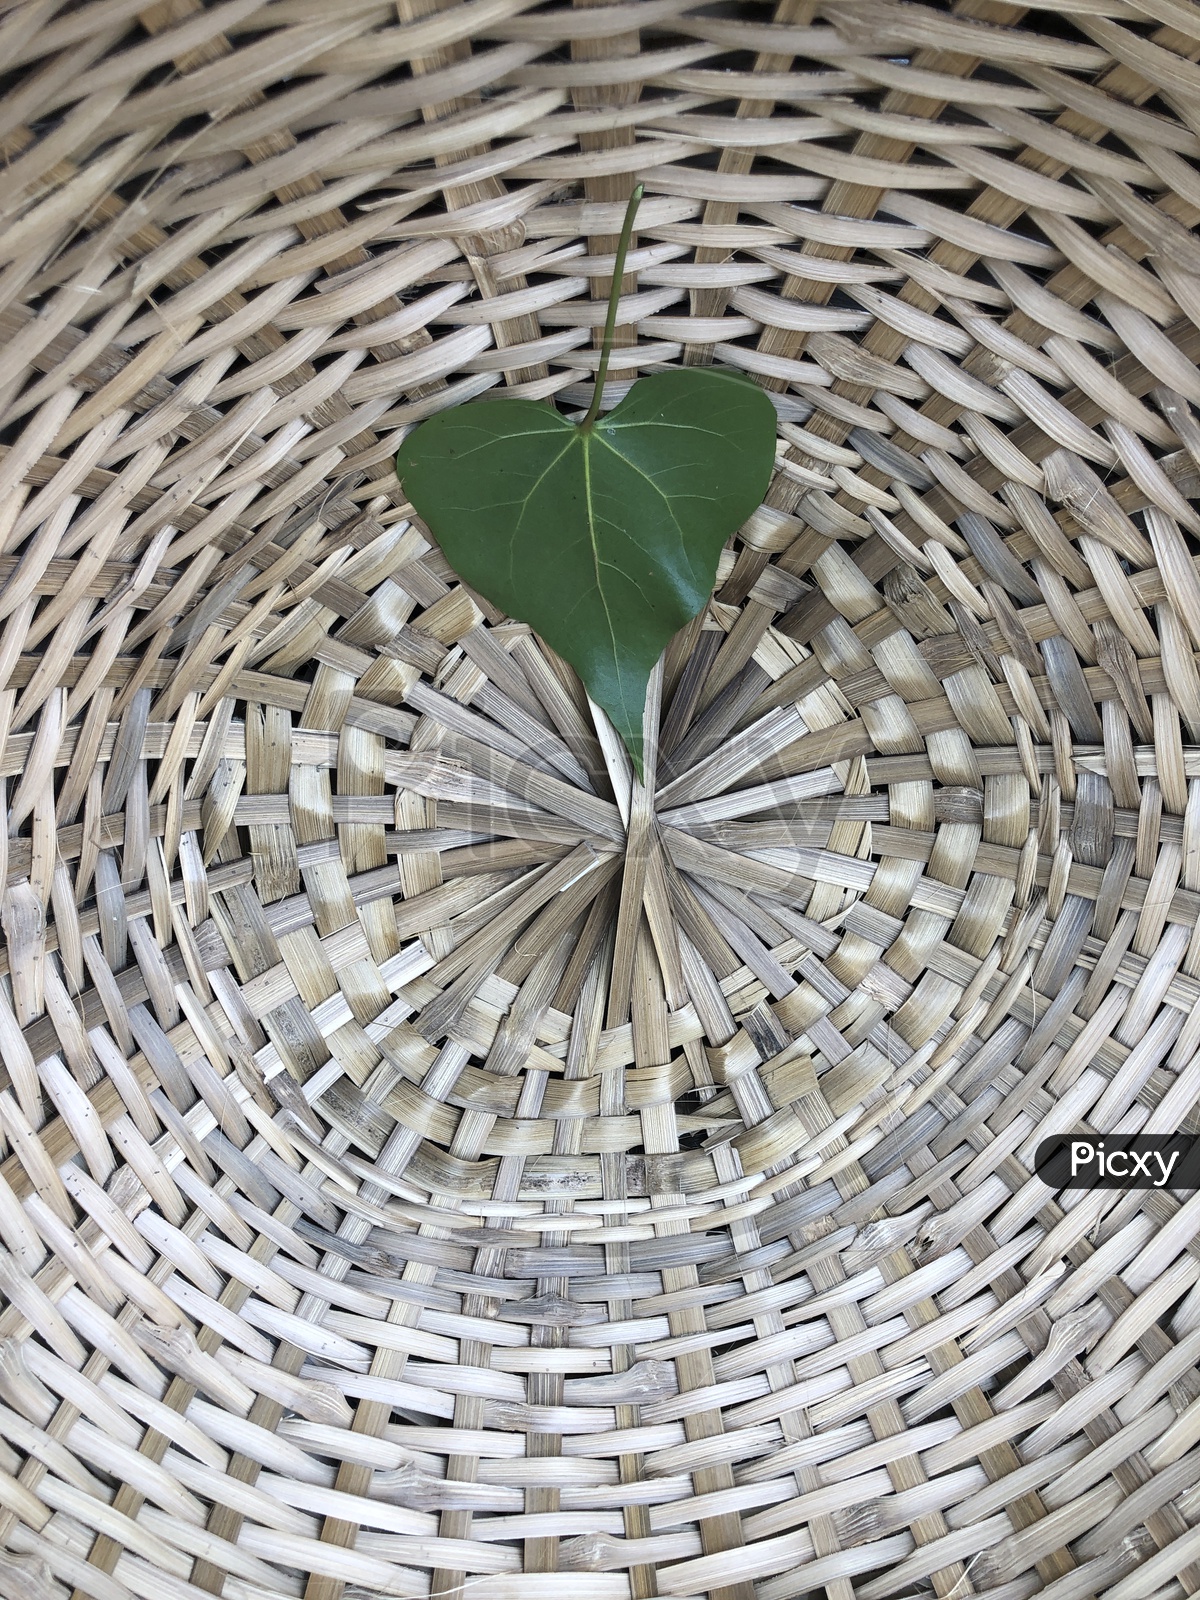 Leaf on the bamboo basket